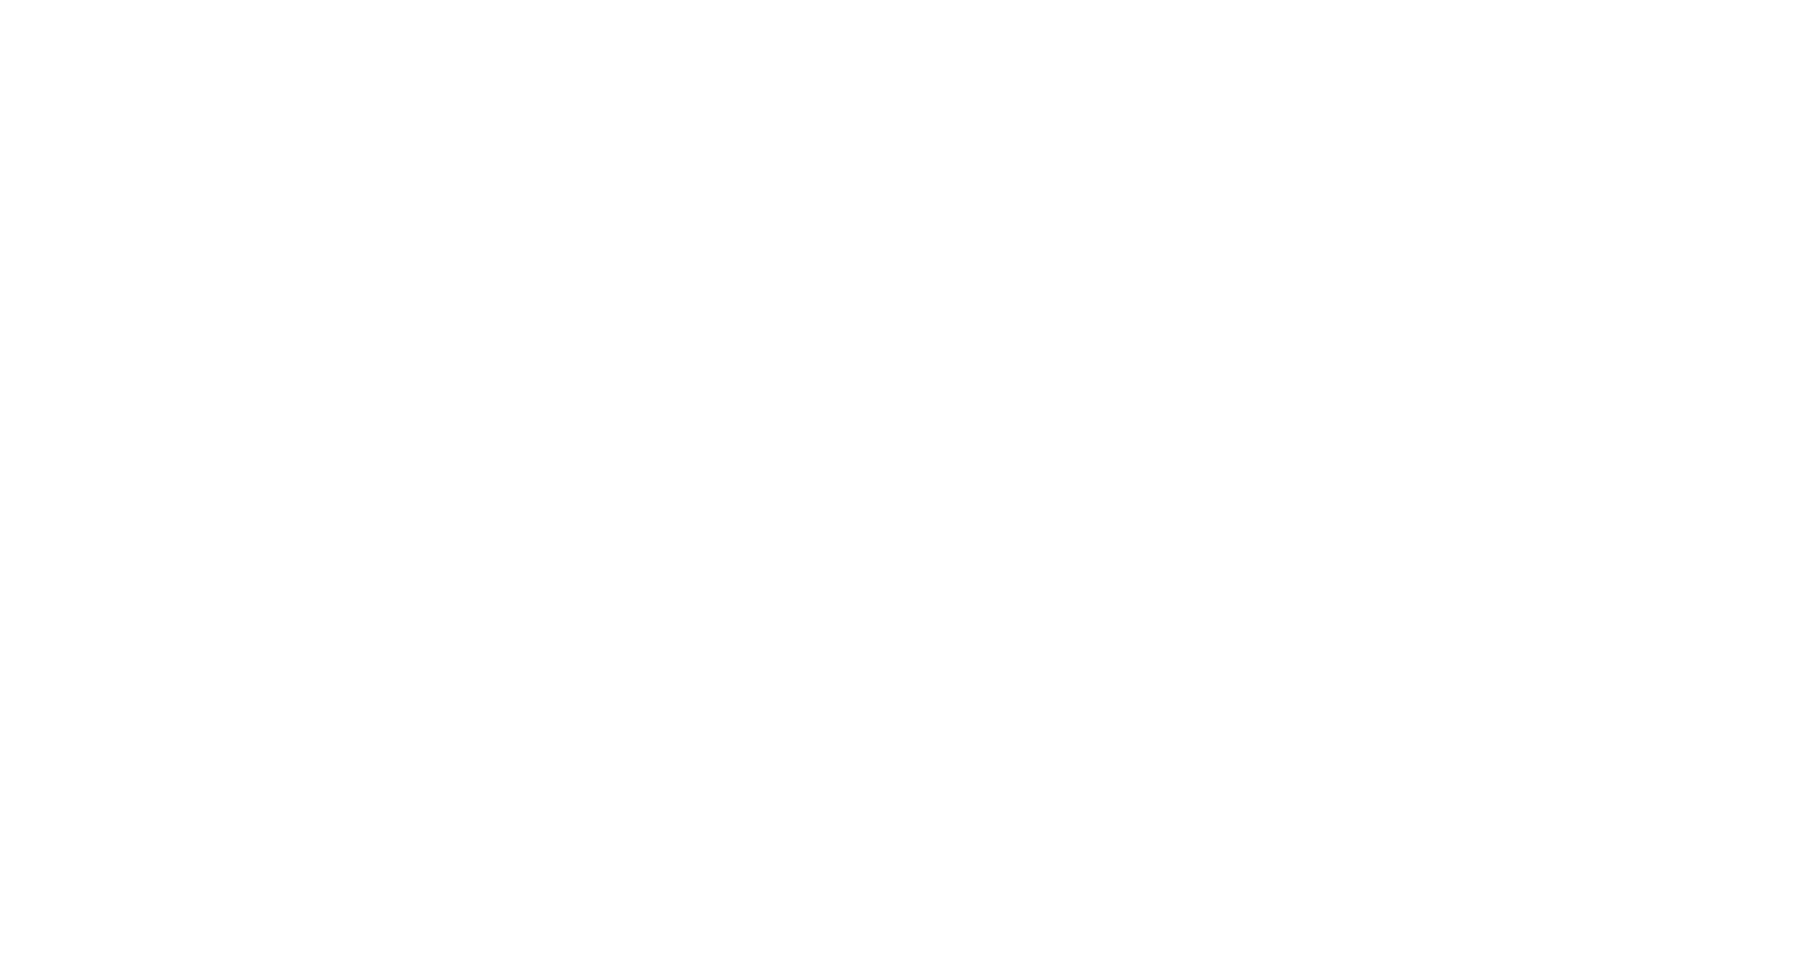 GIORGIO ARMANI